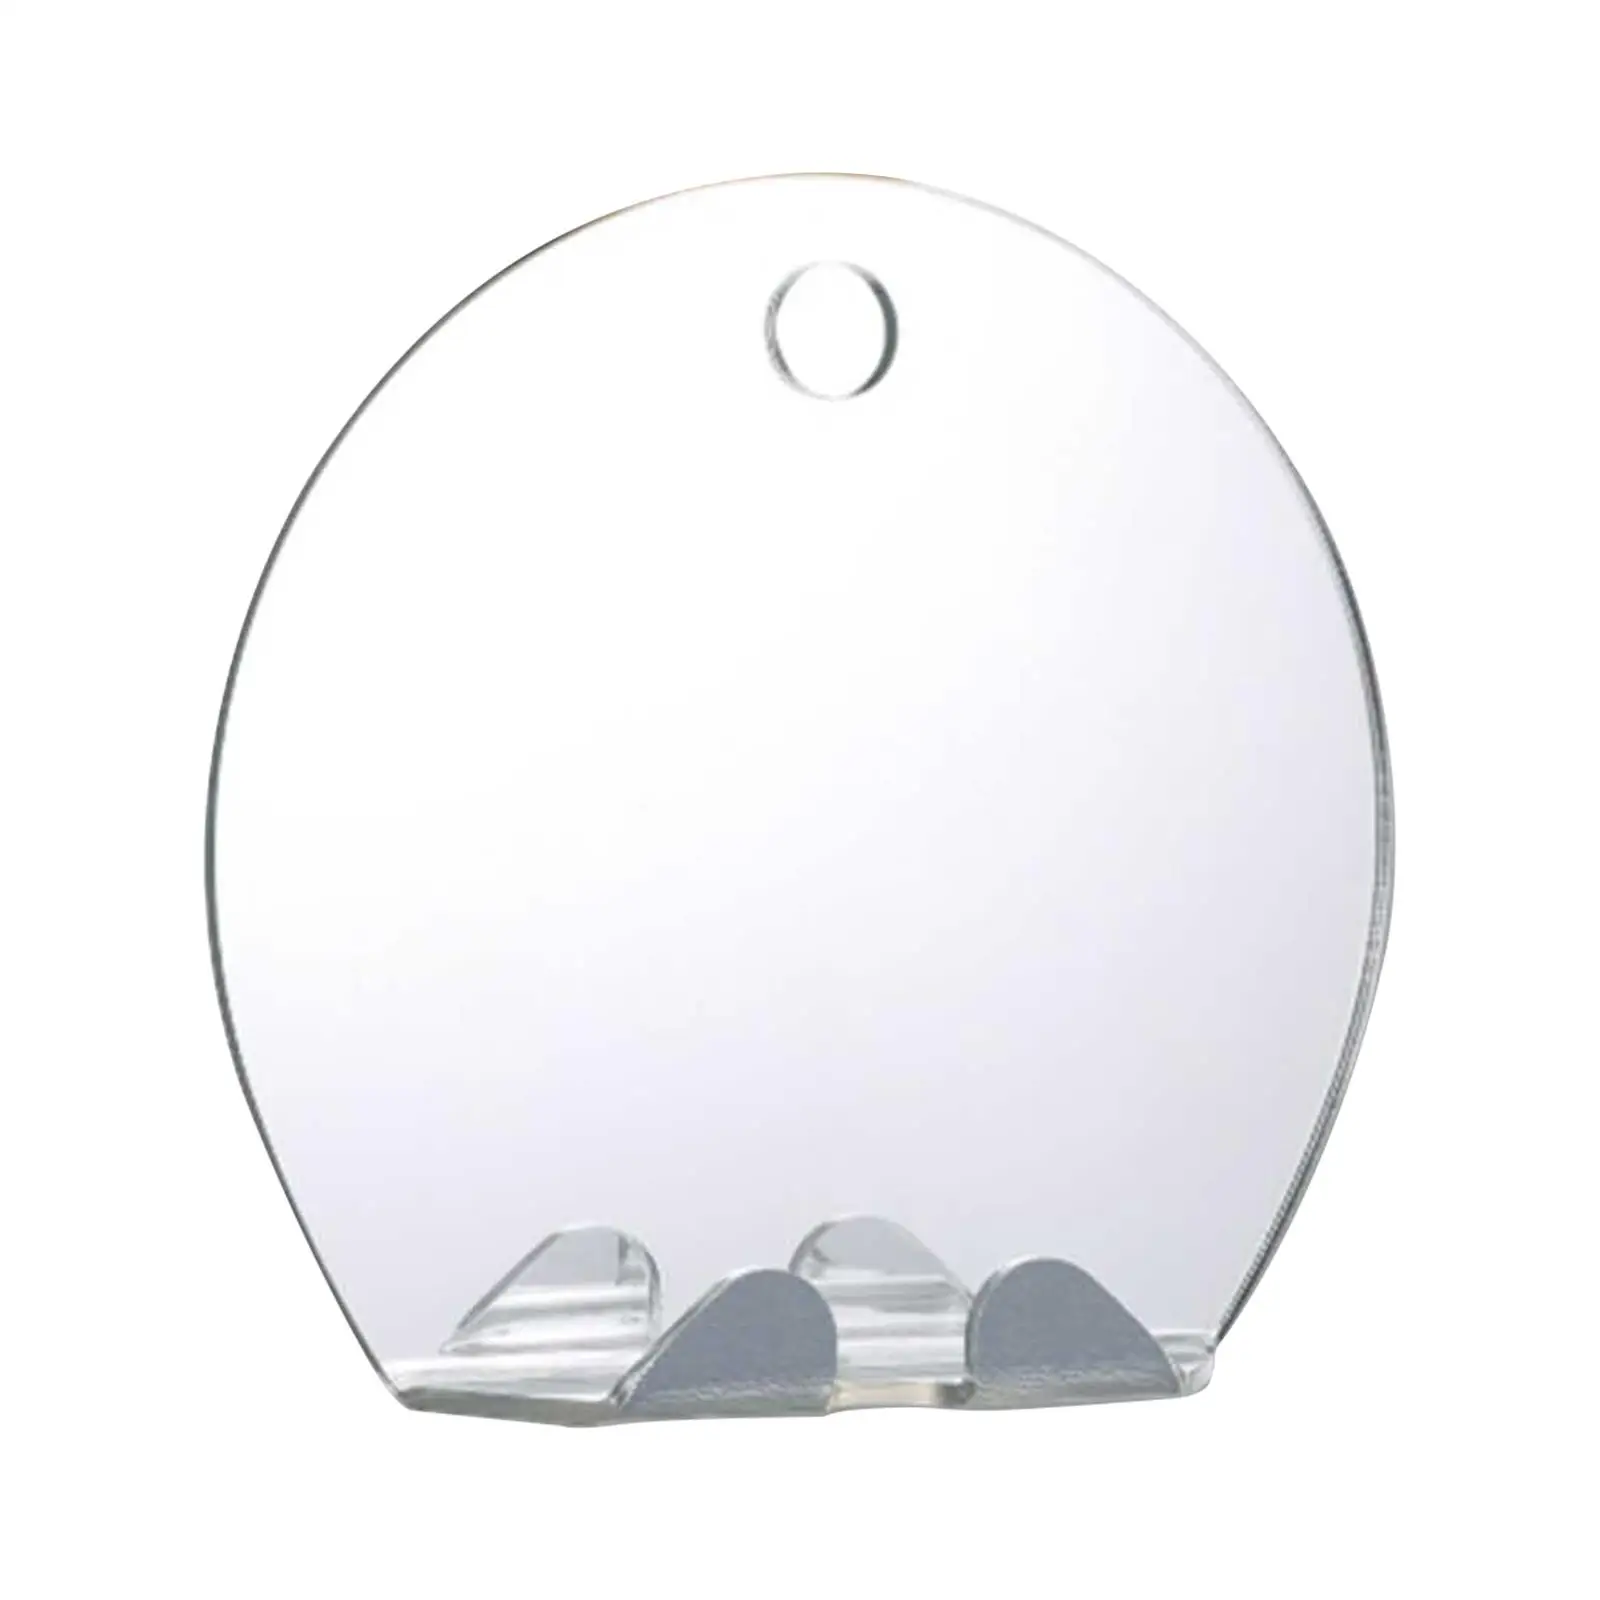 Unbreakable Acrylic Anti Fog Mirror Bathroom Shower Shaving Fogless Mirror Washroom Travel Accessories with 2pcs Wall Suction